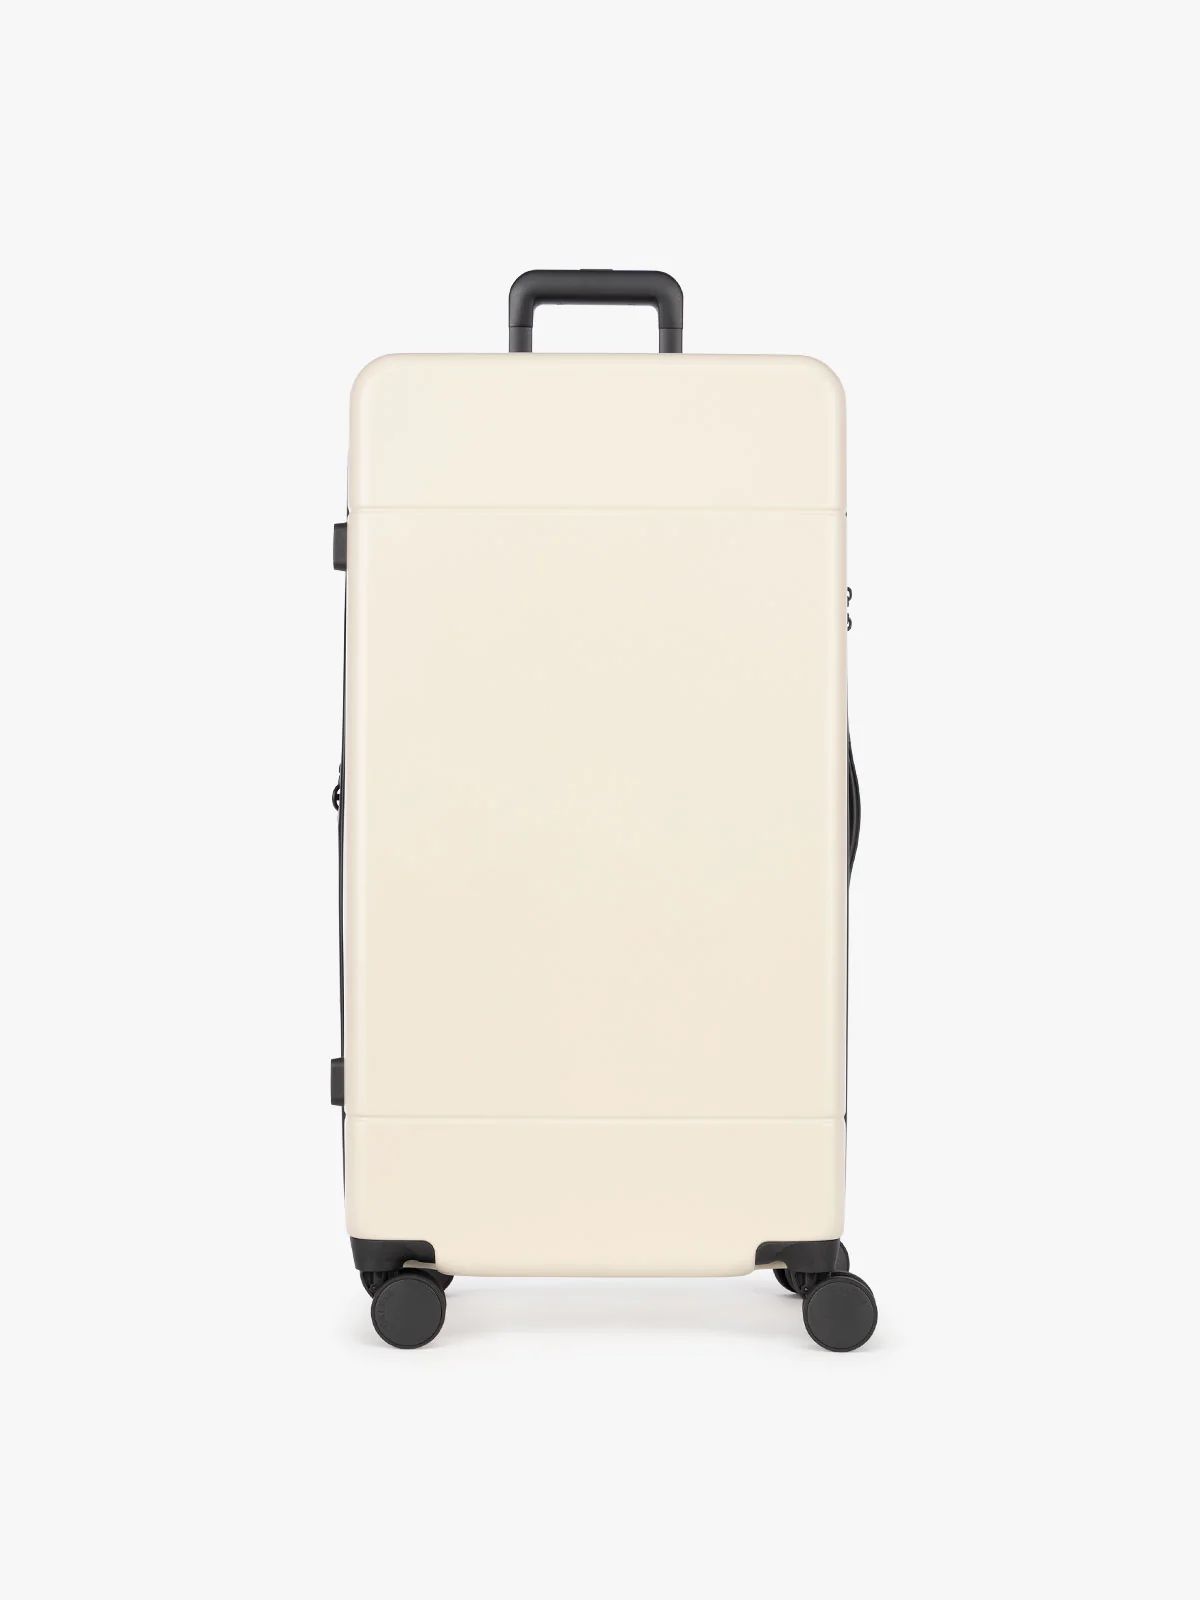 Hue Trunk Luggage | CALPAK Travel